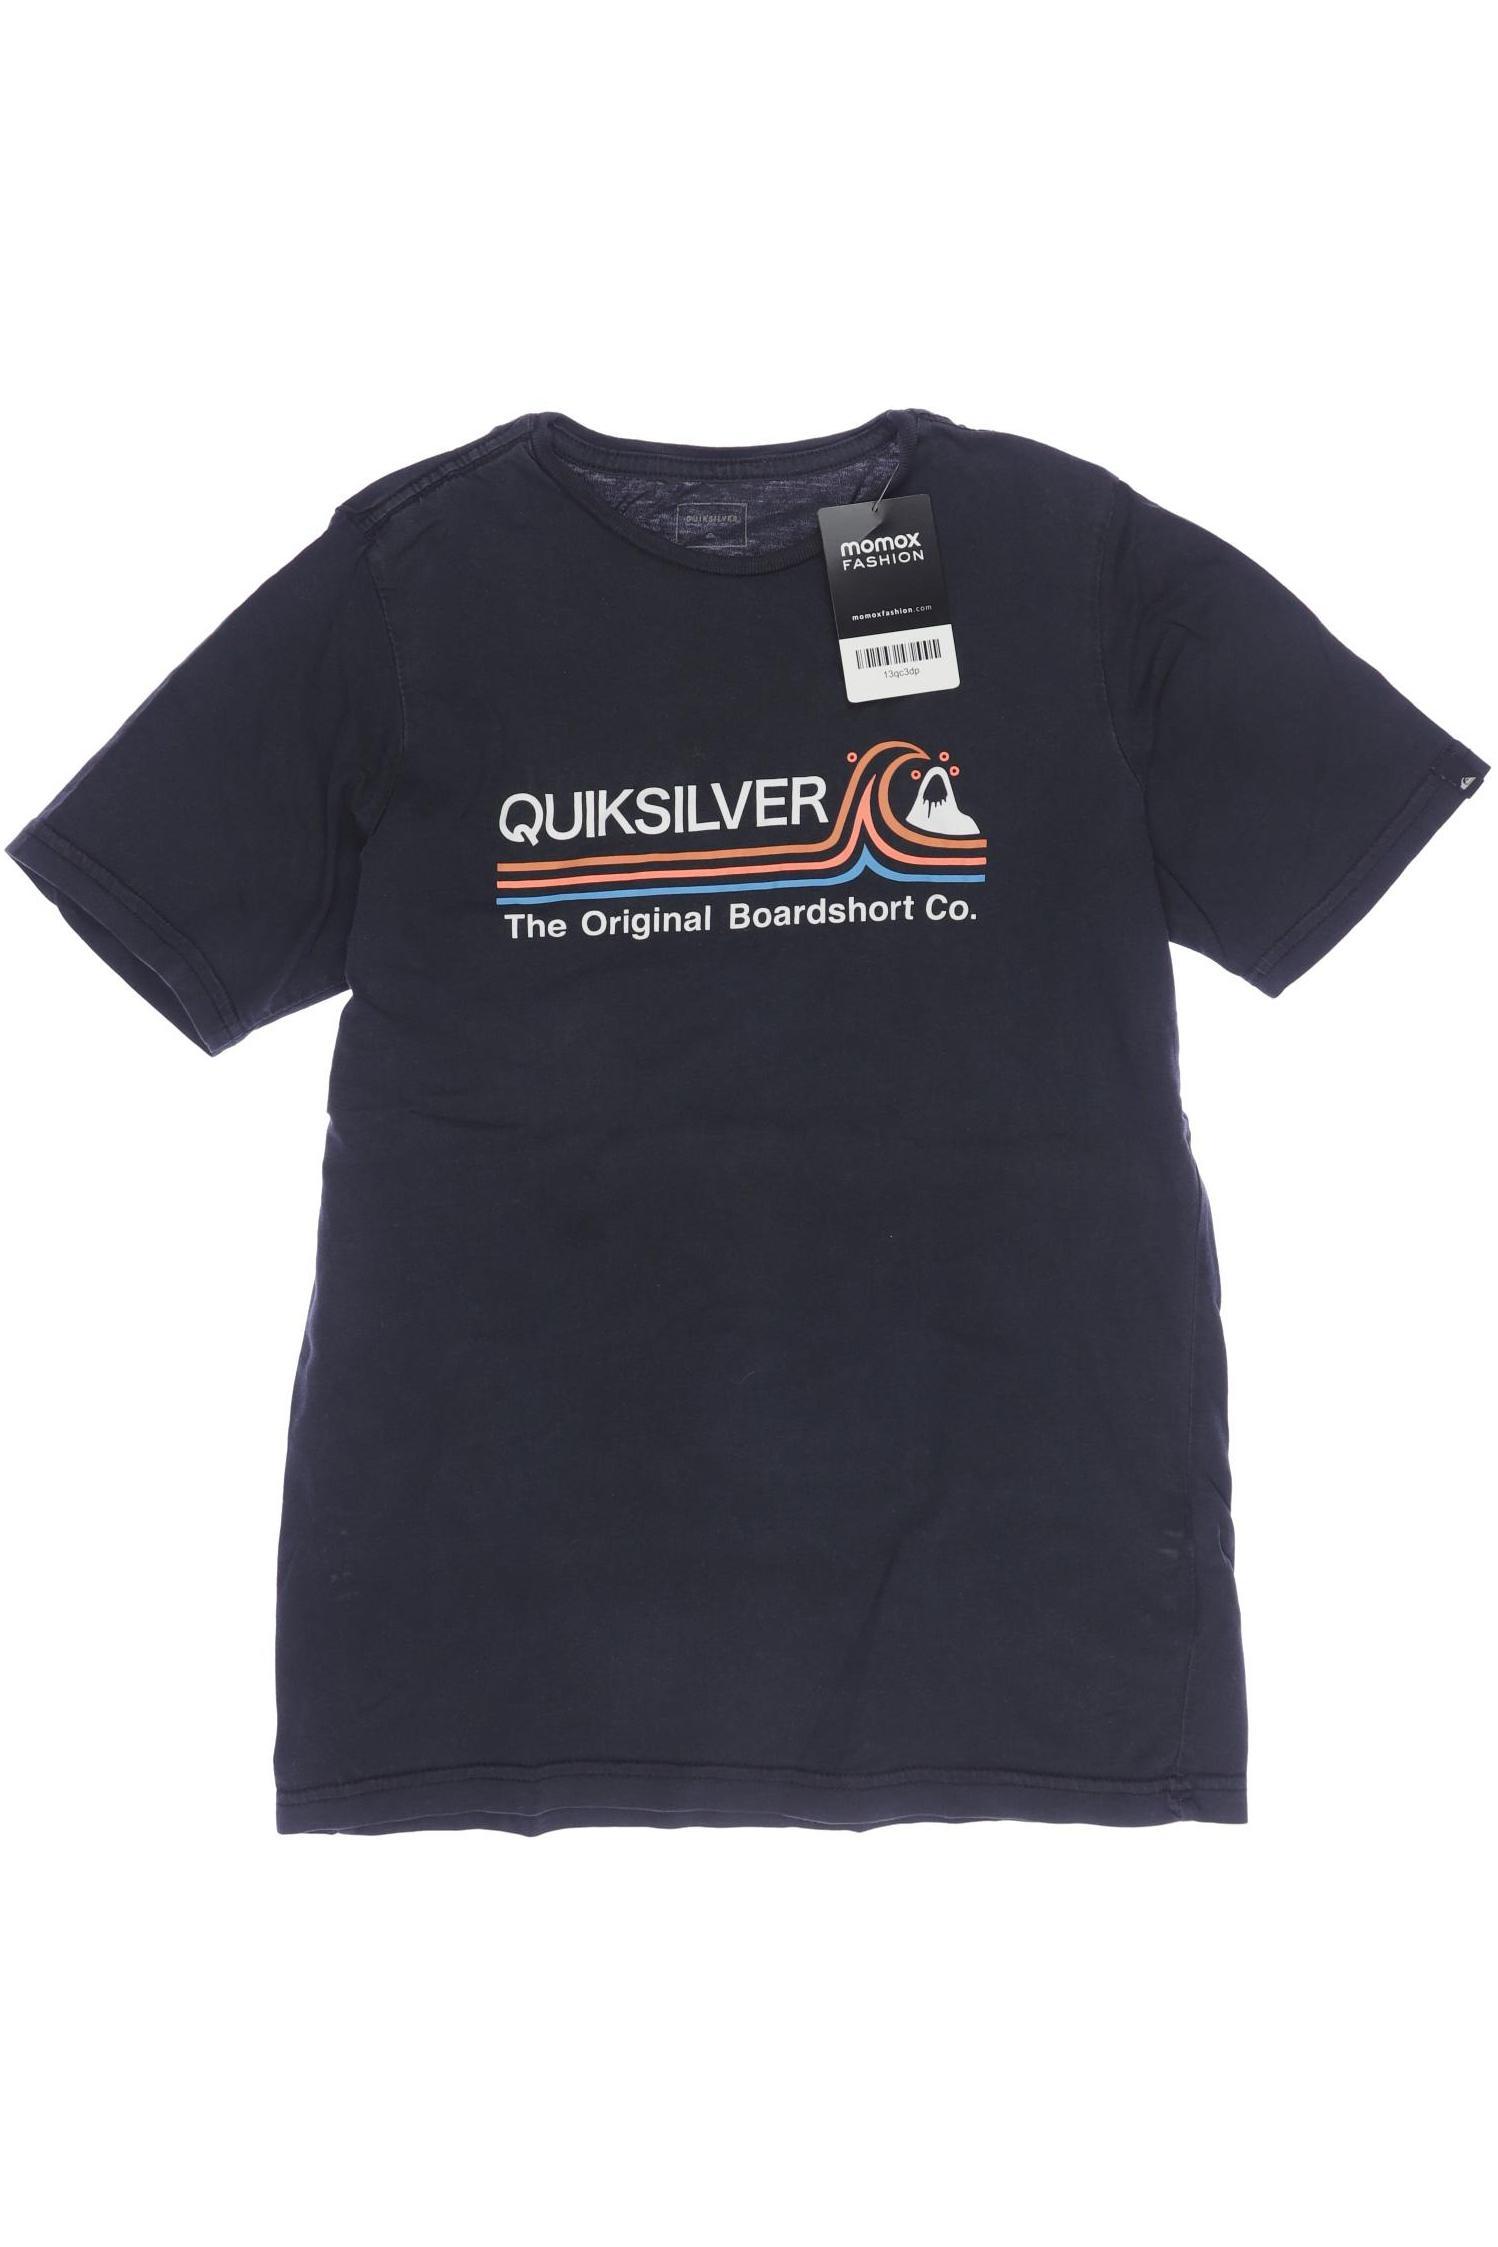 Quiksilver Herren T-Shirt, marineblau, Gr. 164 von Quiksilver